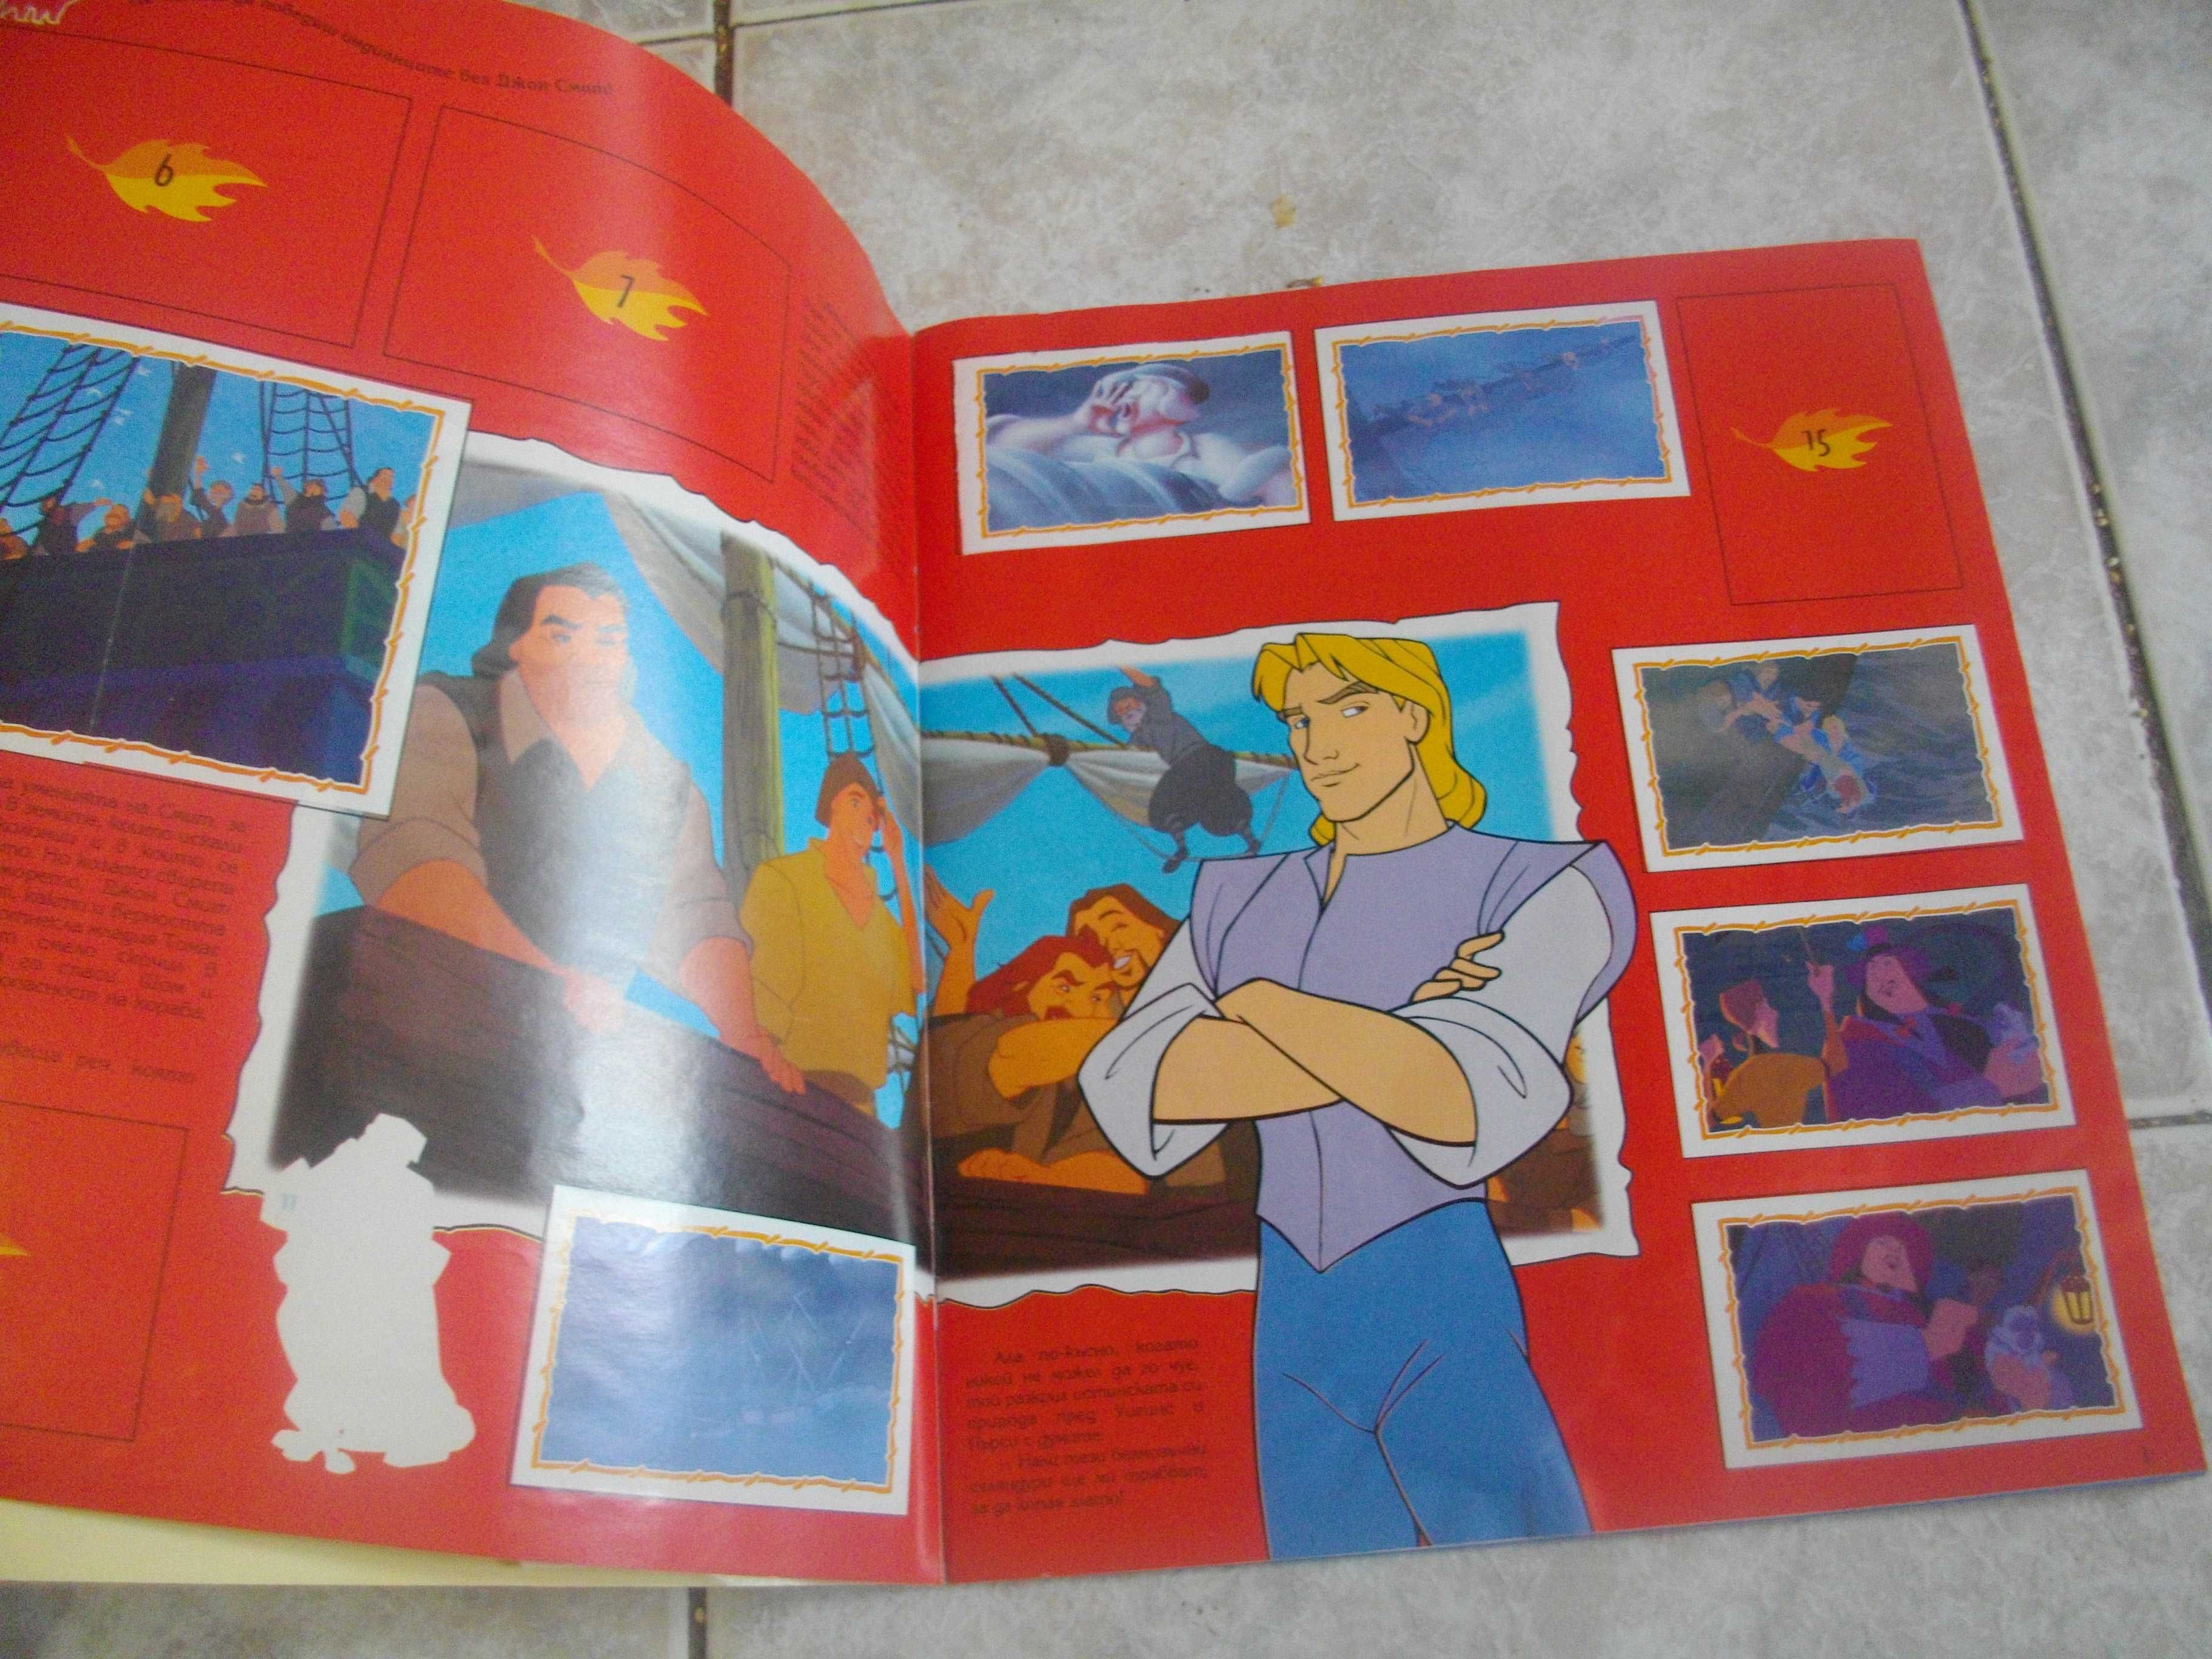 Албум За Лепенки/Стикери Покахонтас  Disney-1995/1996г